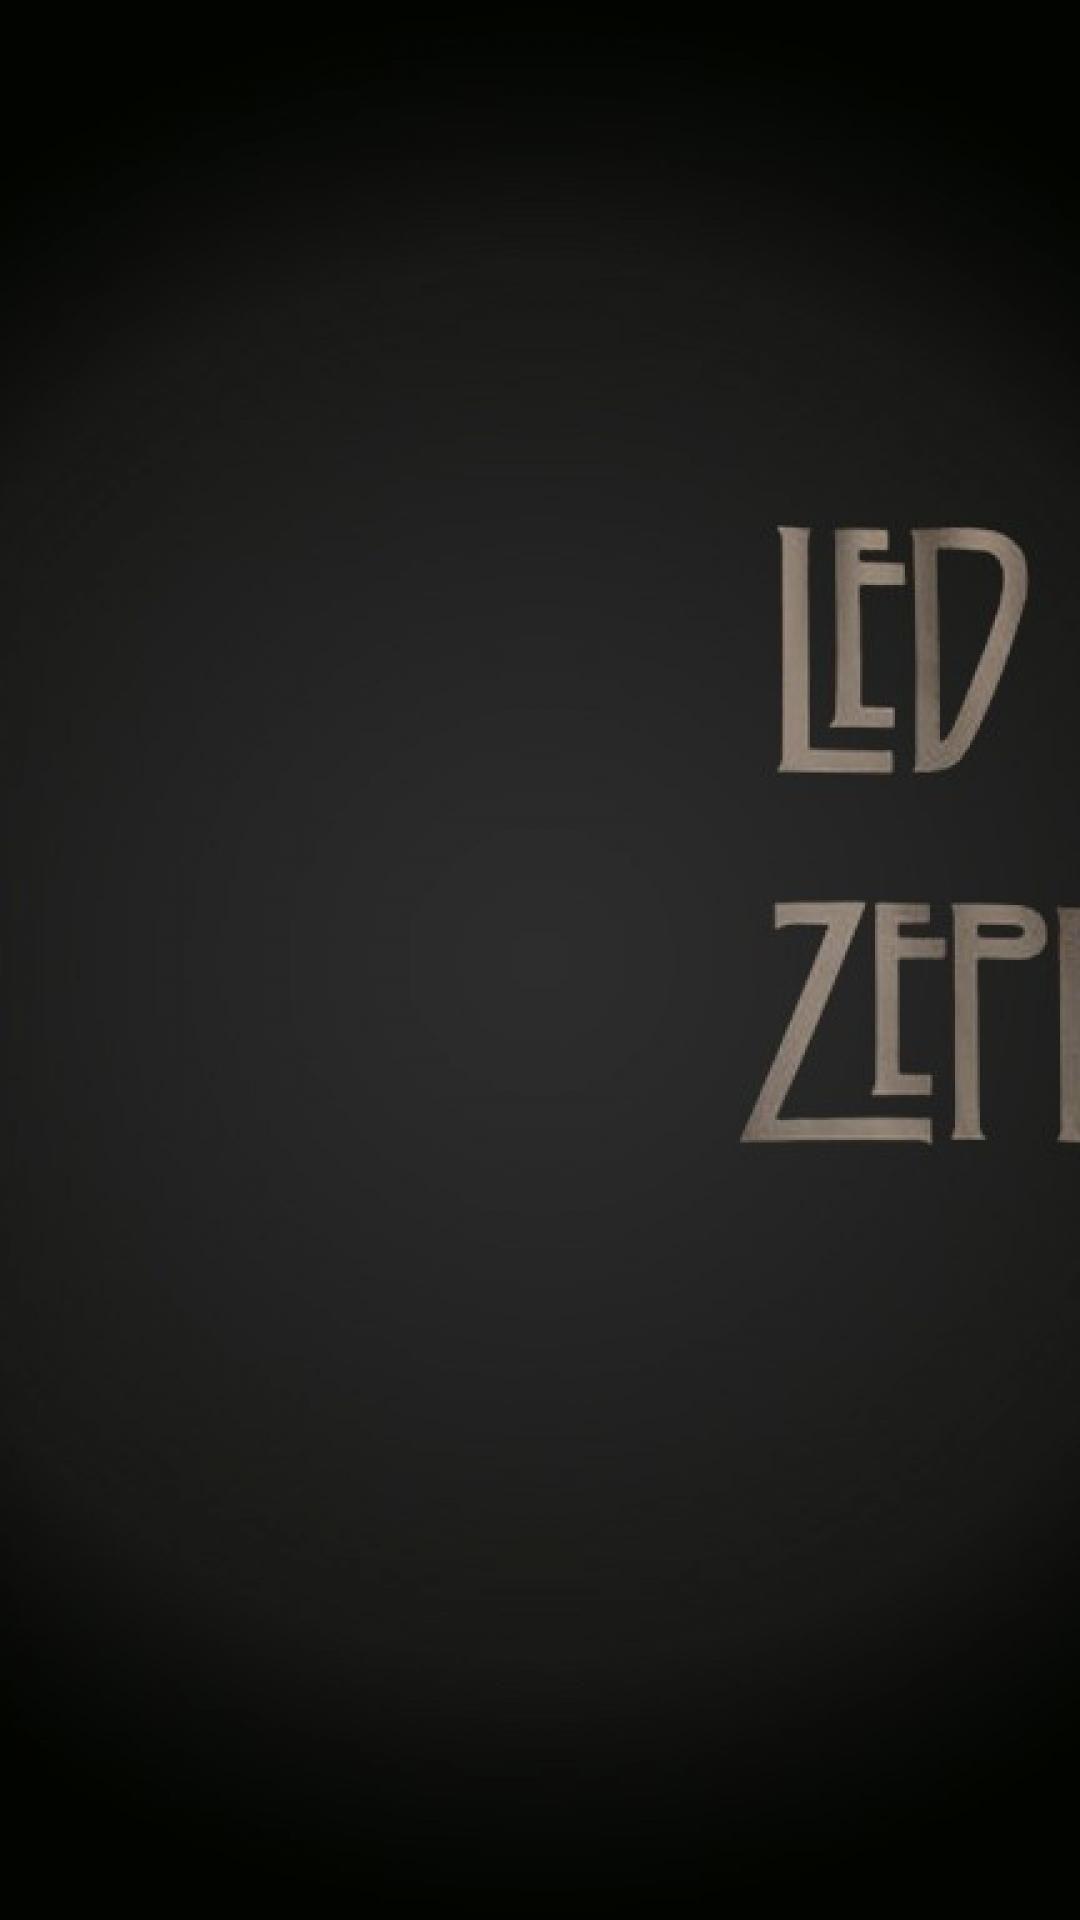 Led Zeppelin Iphone Wallpaper